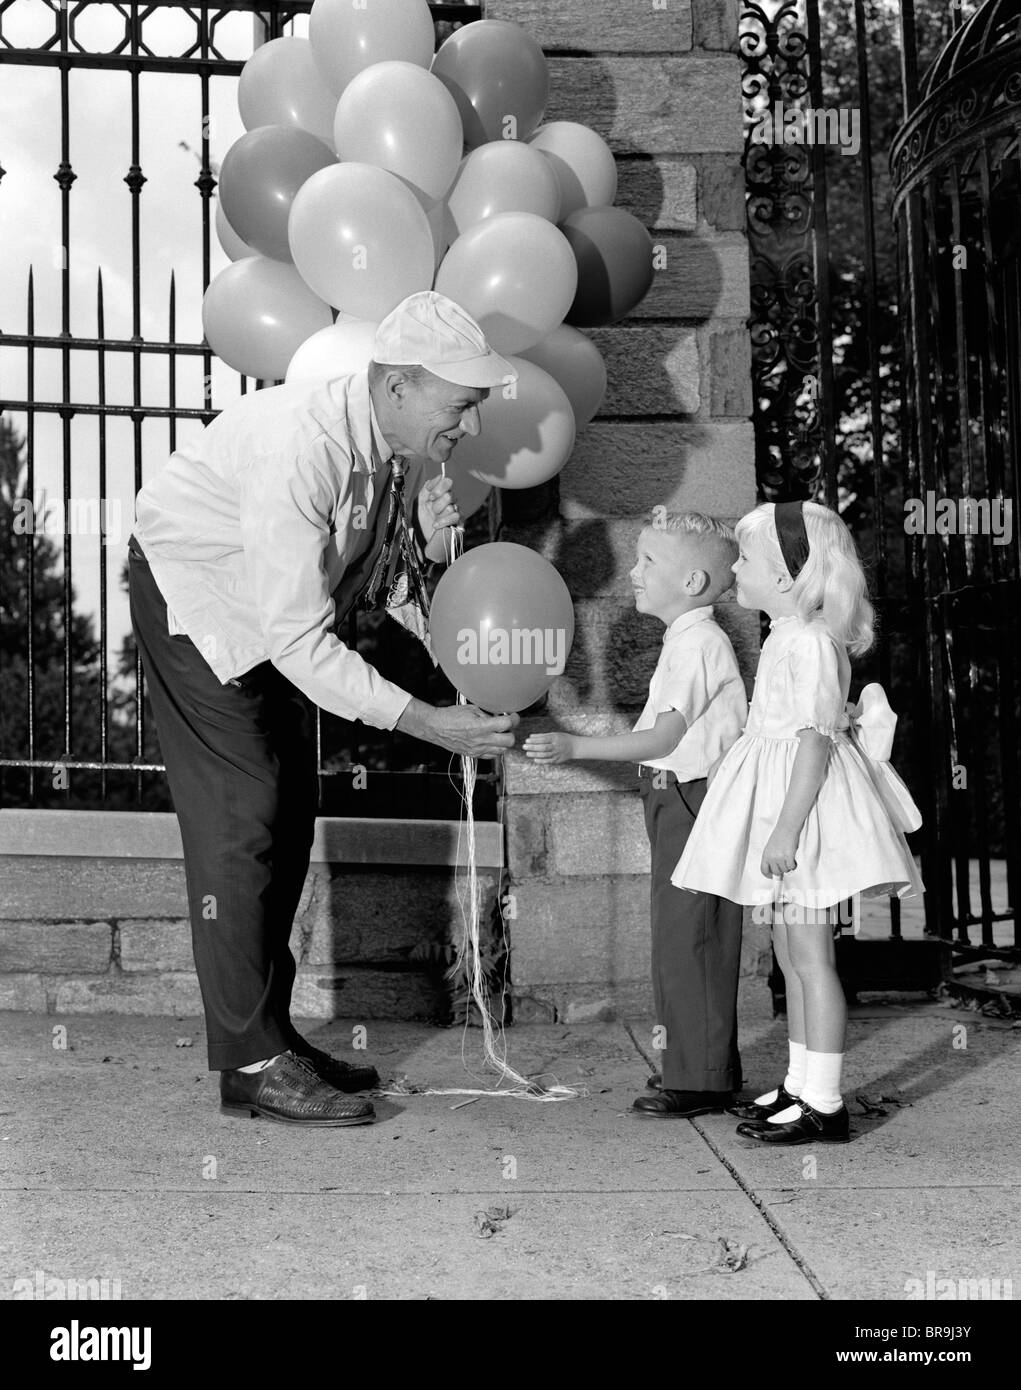 1960s CHILDREN BOY GIRL GETTING A BALLOON FROM MAN Stock Photo